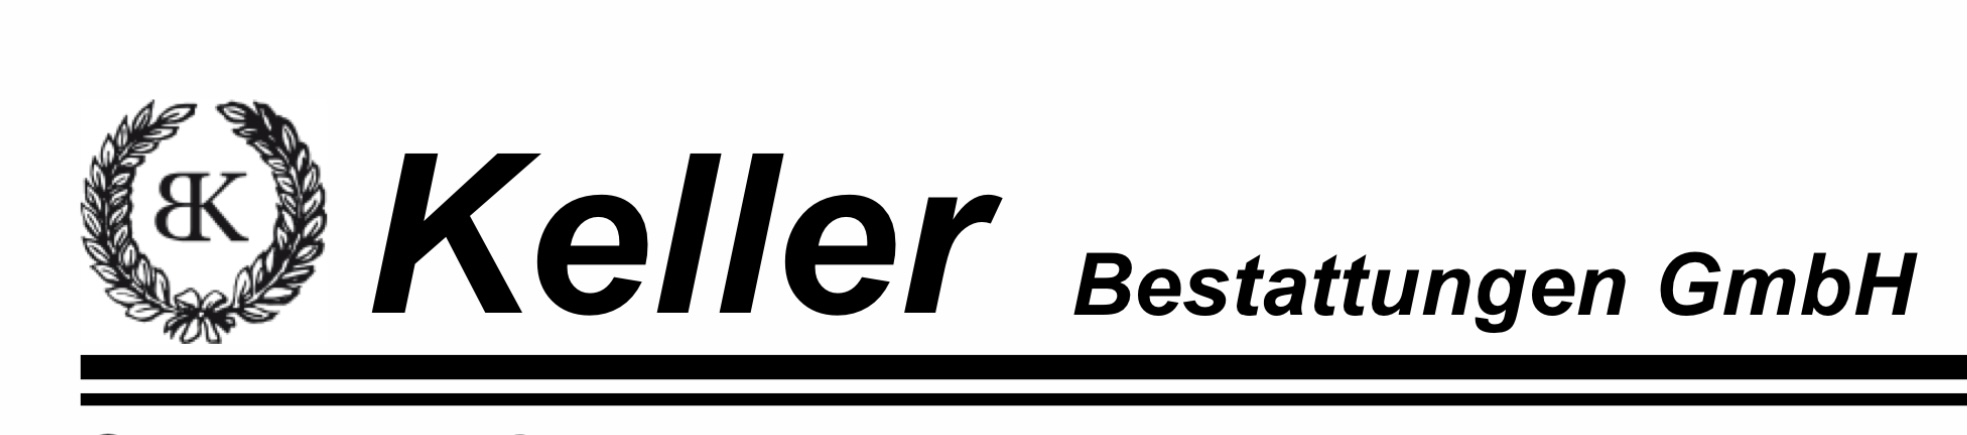 Keller Bestattungen GmbH